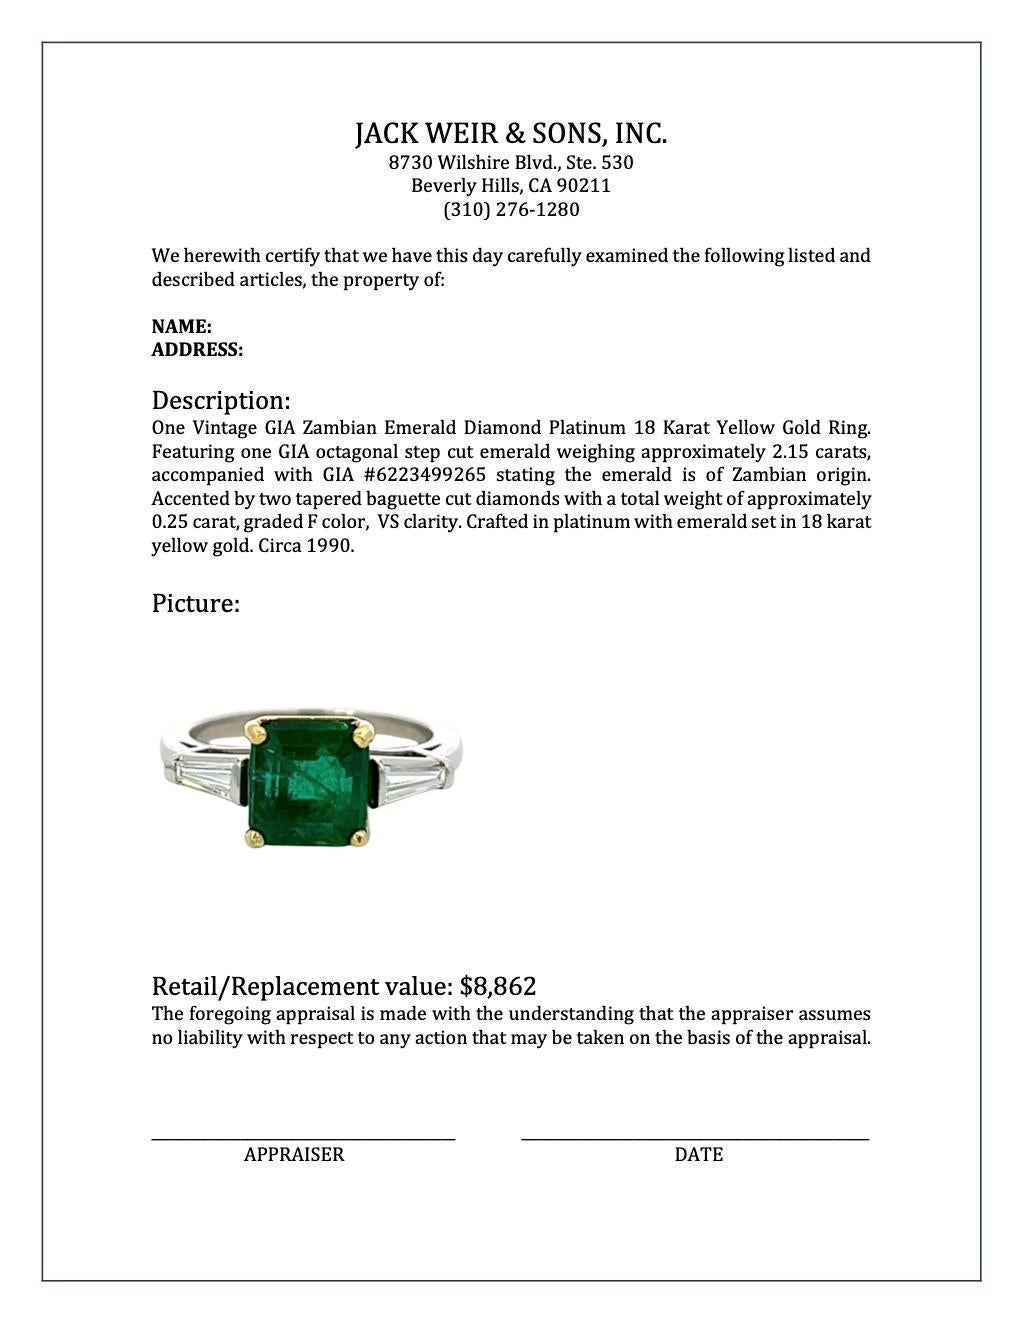 Vintage Gia Zambian Emerald Diamond Platinum 18 Karat Yellow Gold Ring 1